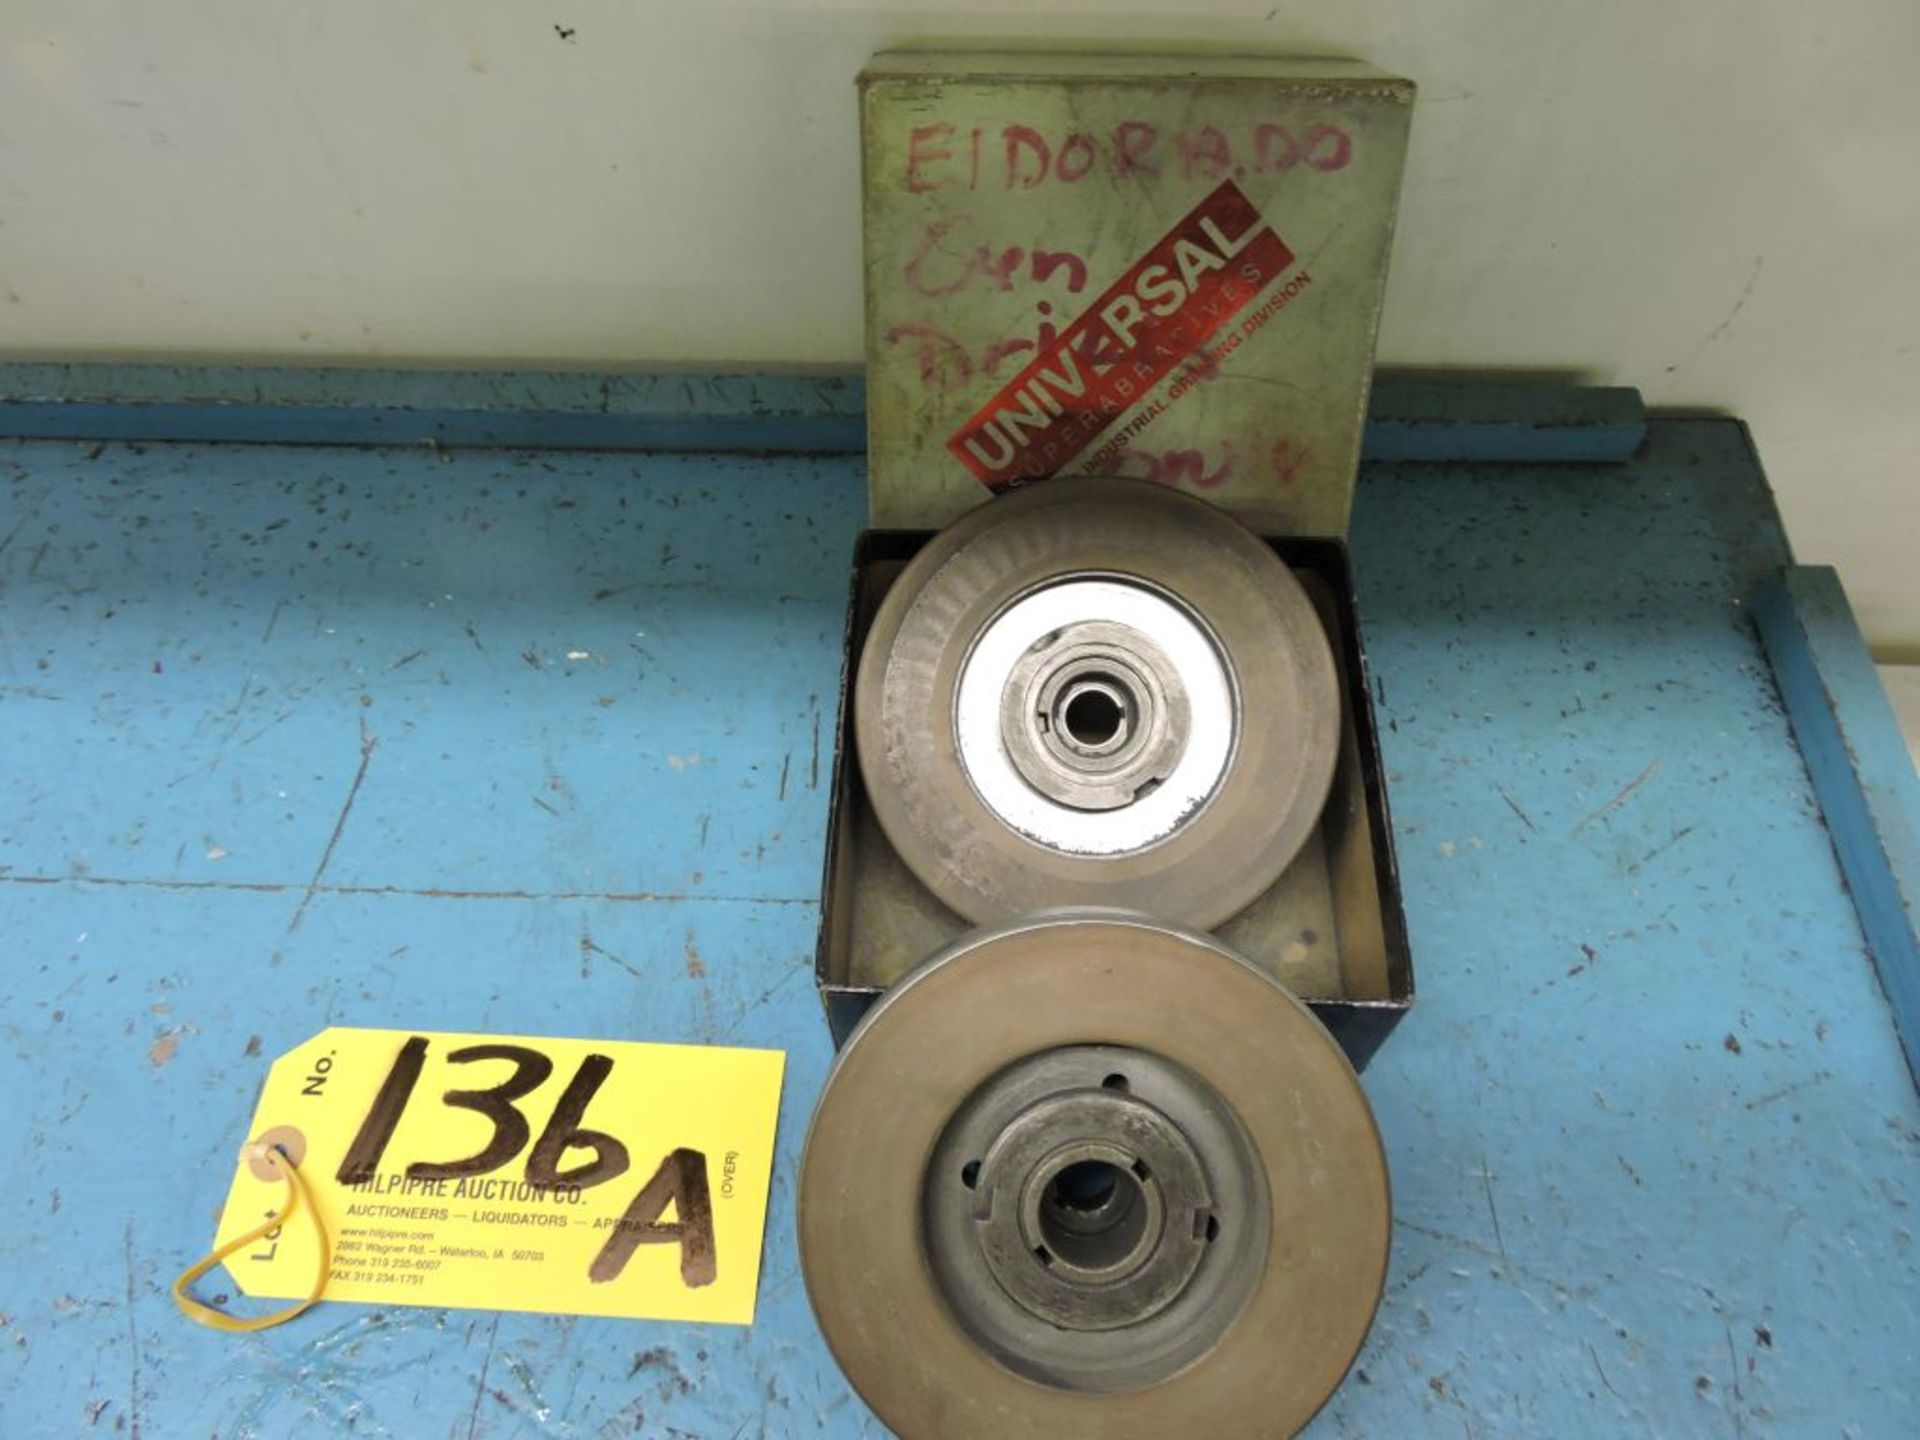 Eldorado gun drill grinding wheels, (approx. 2).